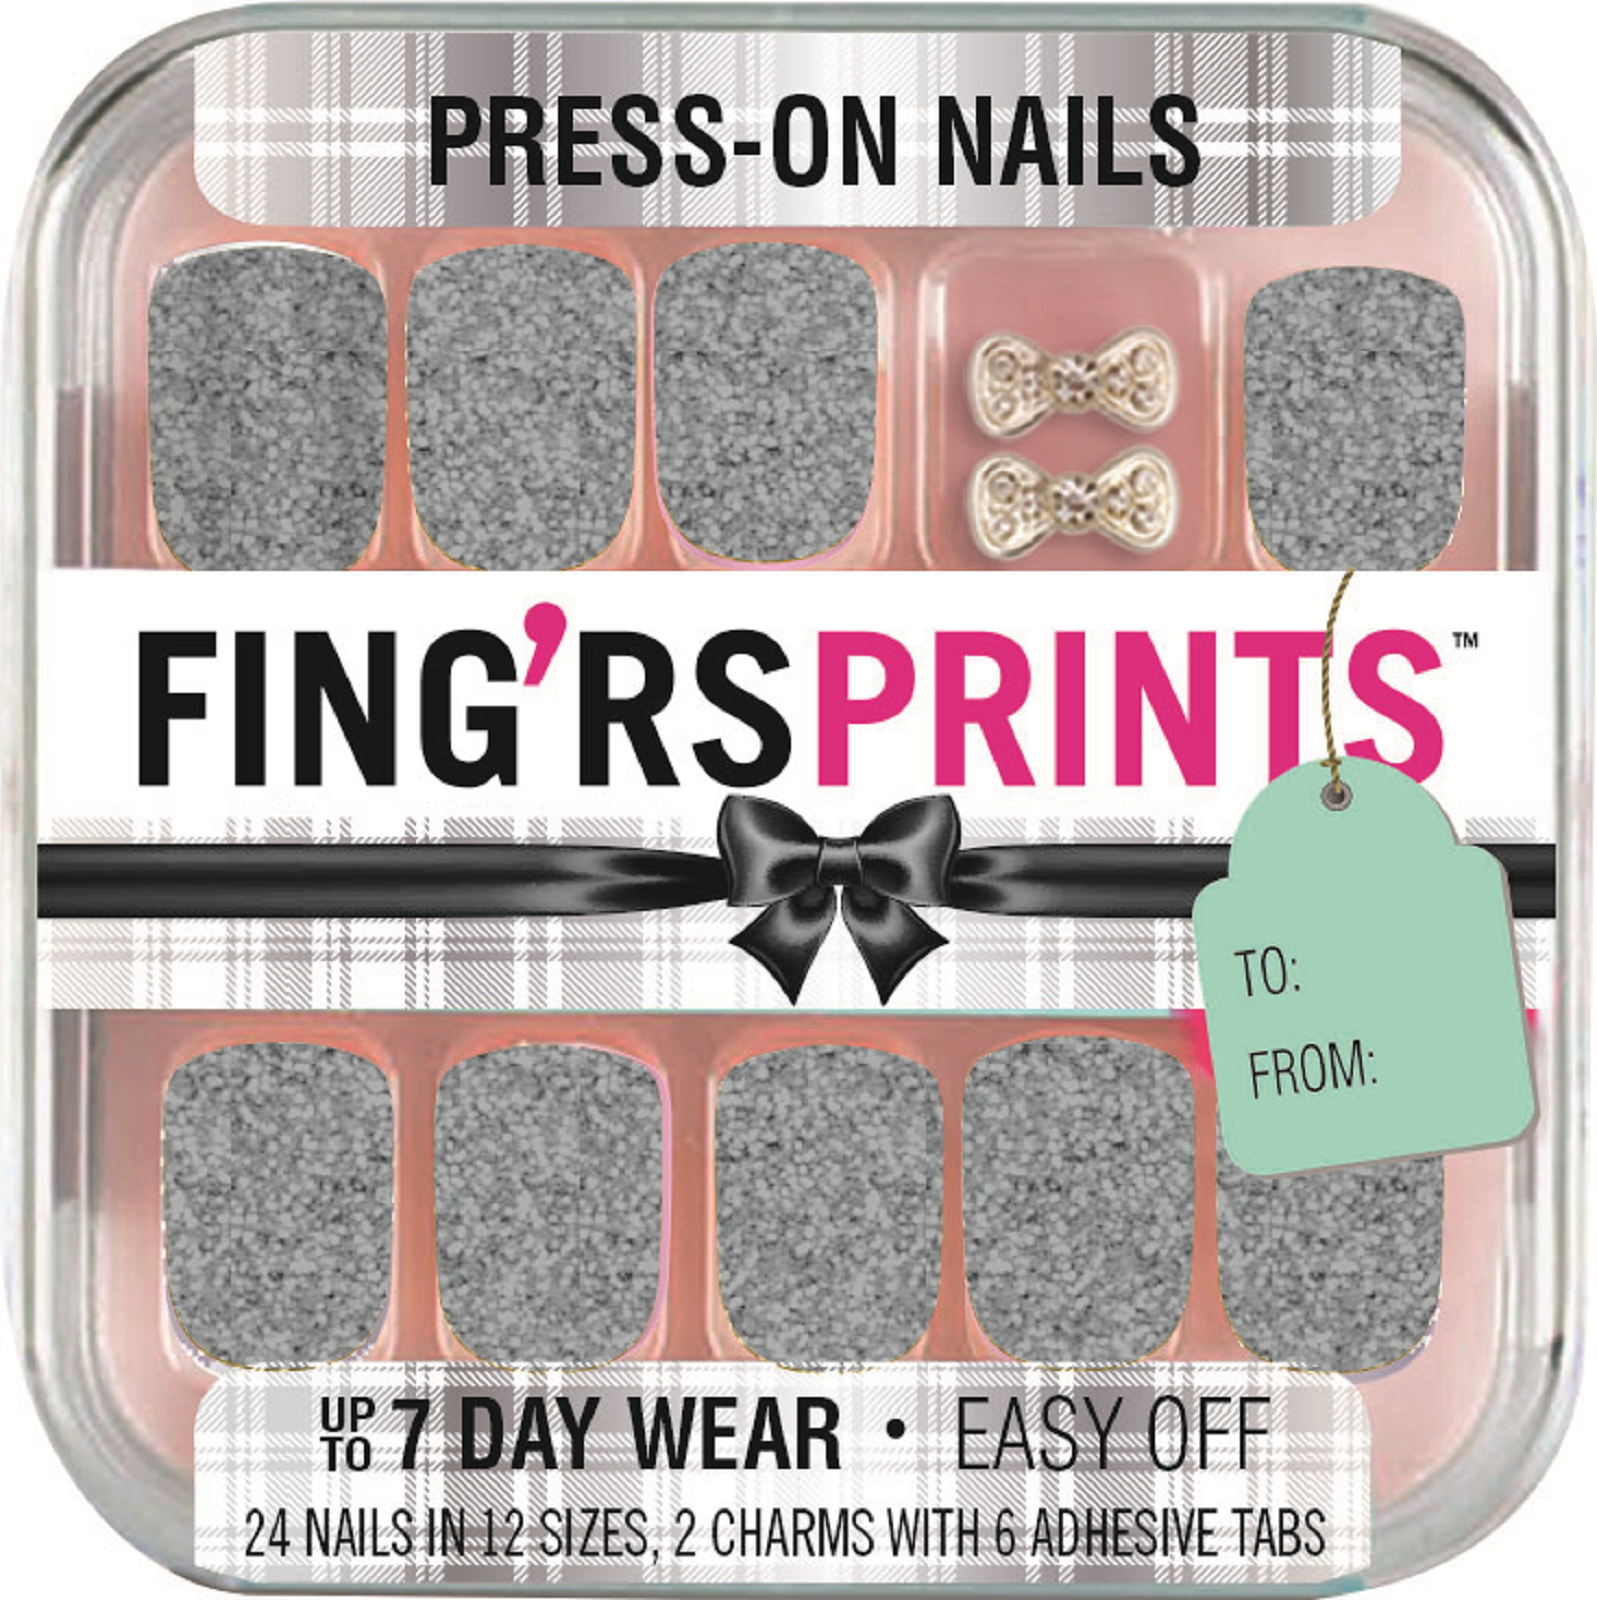 Fing'rs Prints Girlie Prints Nails Press-on Nails